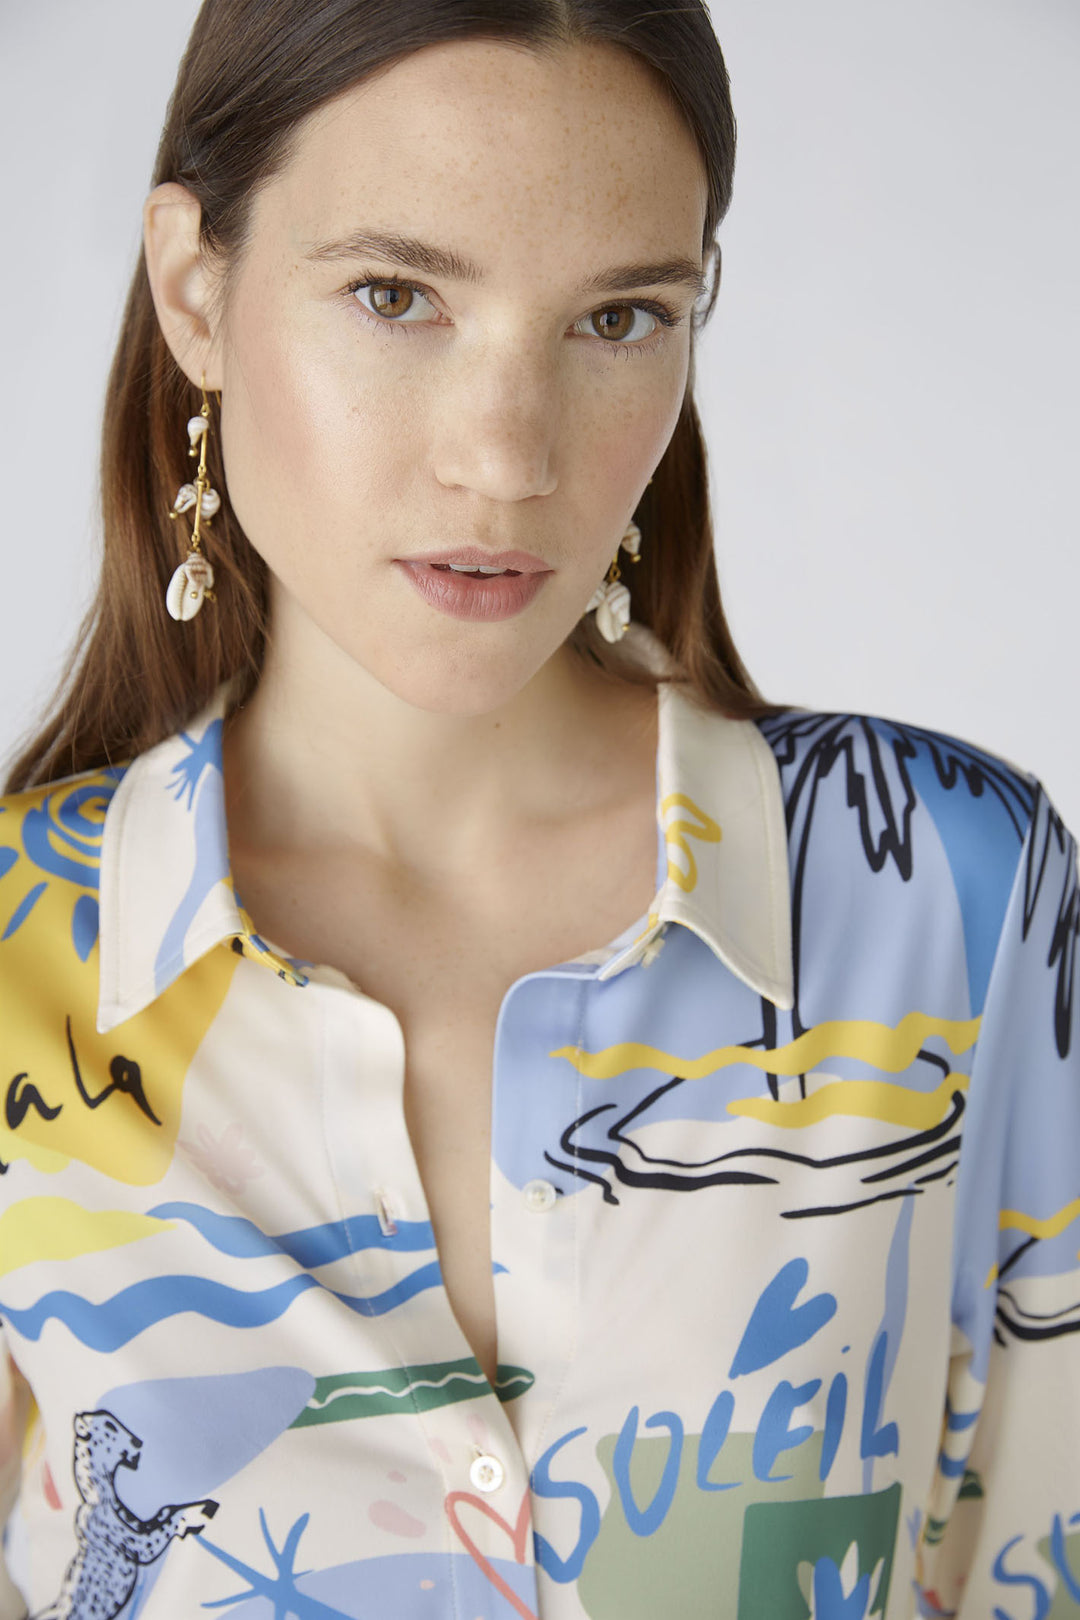 Oui 87556 Yellow Blue Summer Love Print Shirt Dress - Olivoia Grace Fashion